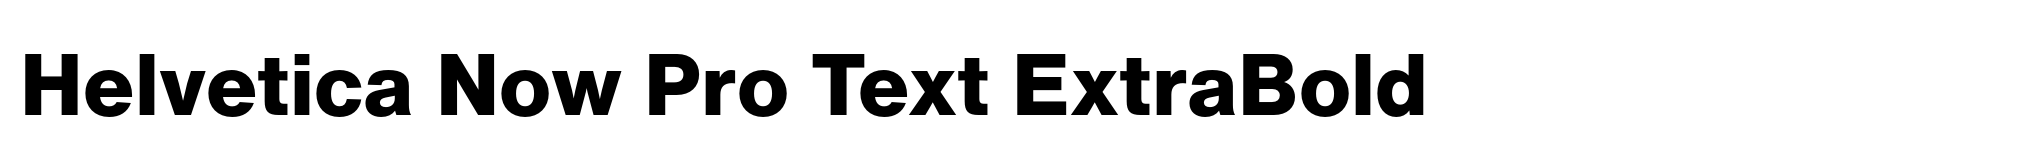 Helvetica Now Pro Text ExtraBold image